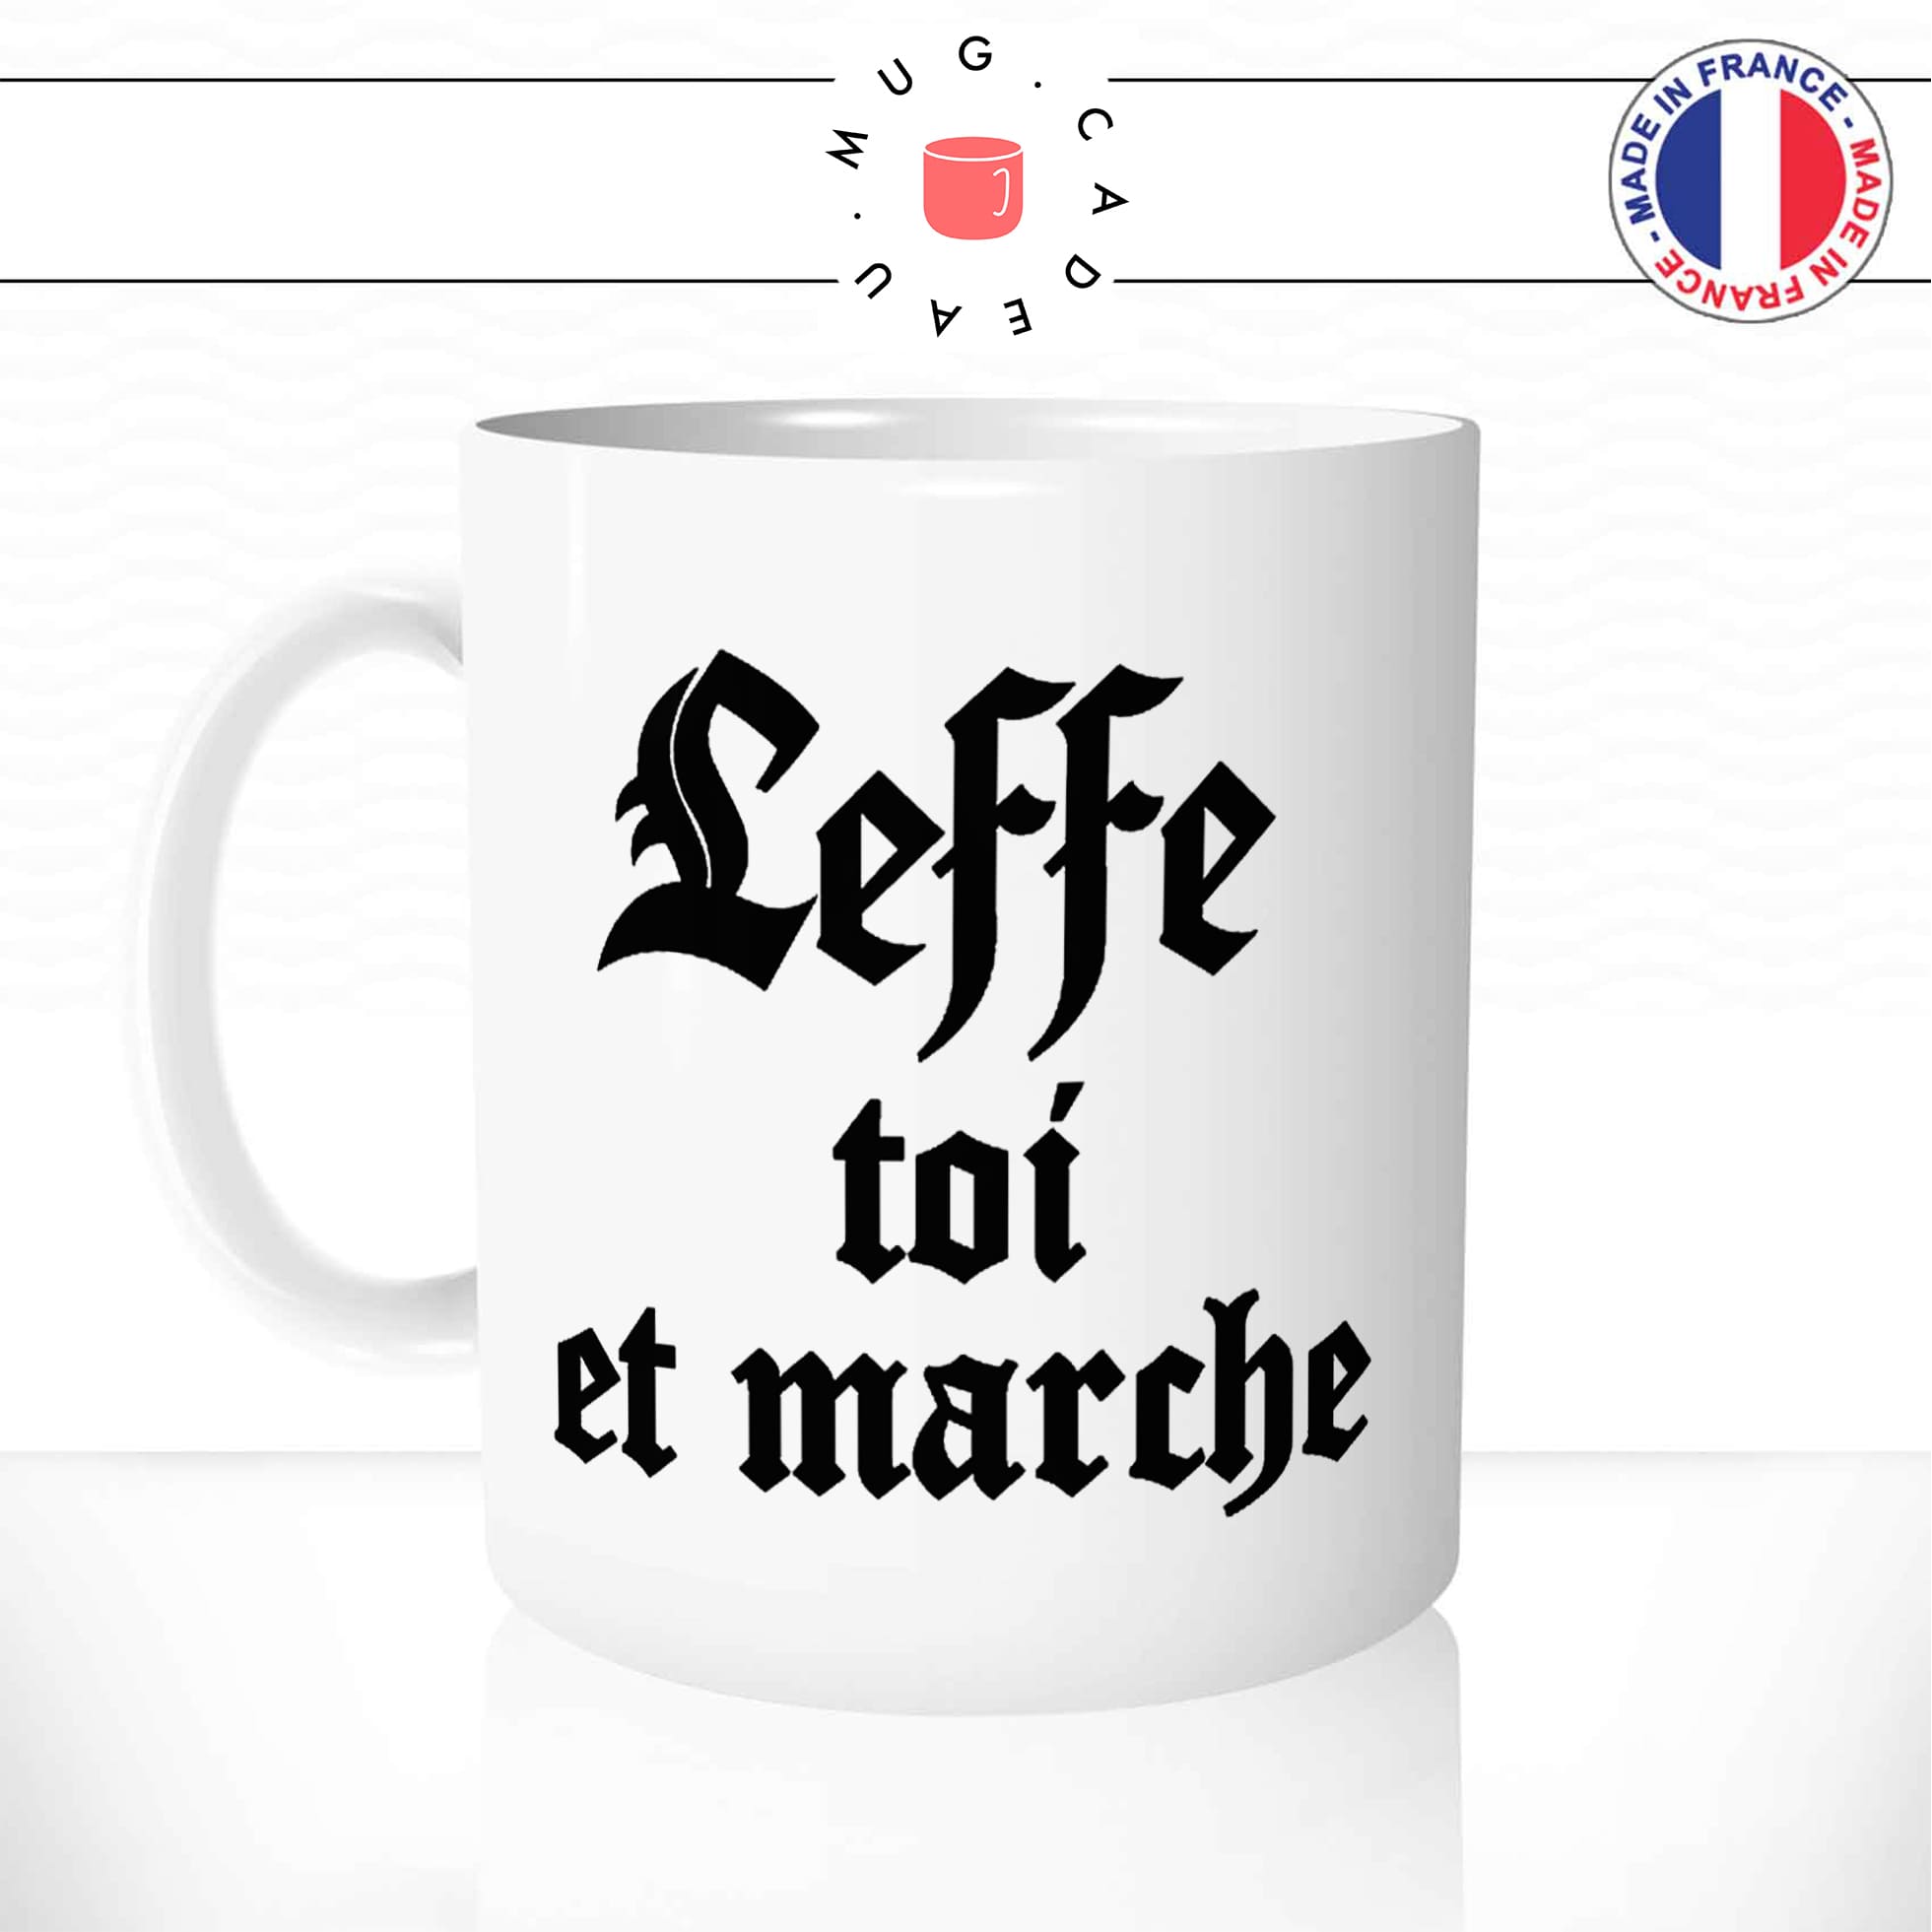 Mug Leffe Toi Et Marche